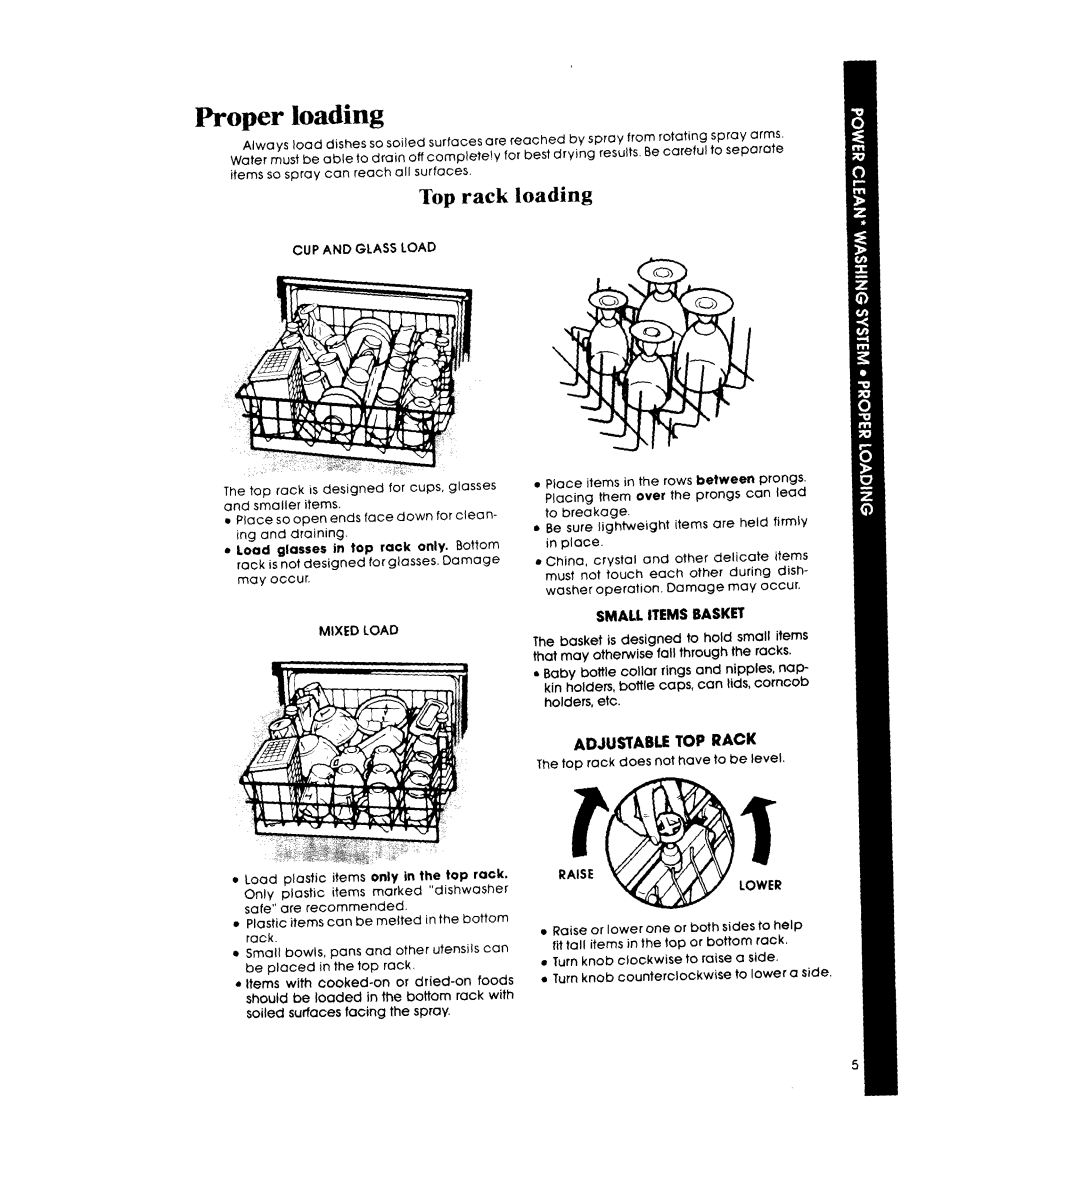 Whirlpool DU9000XR manual Proper loading, Top rack loading, Adjustable Top Rack, Small Items Basket 